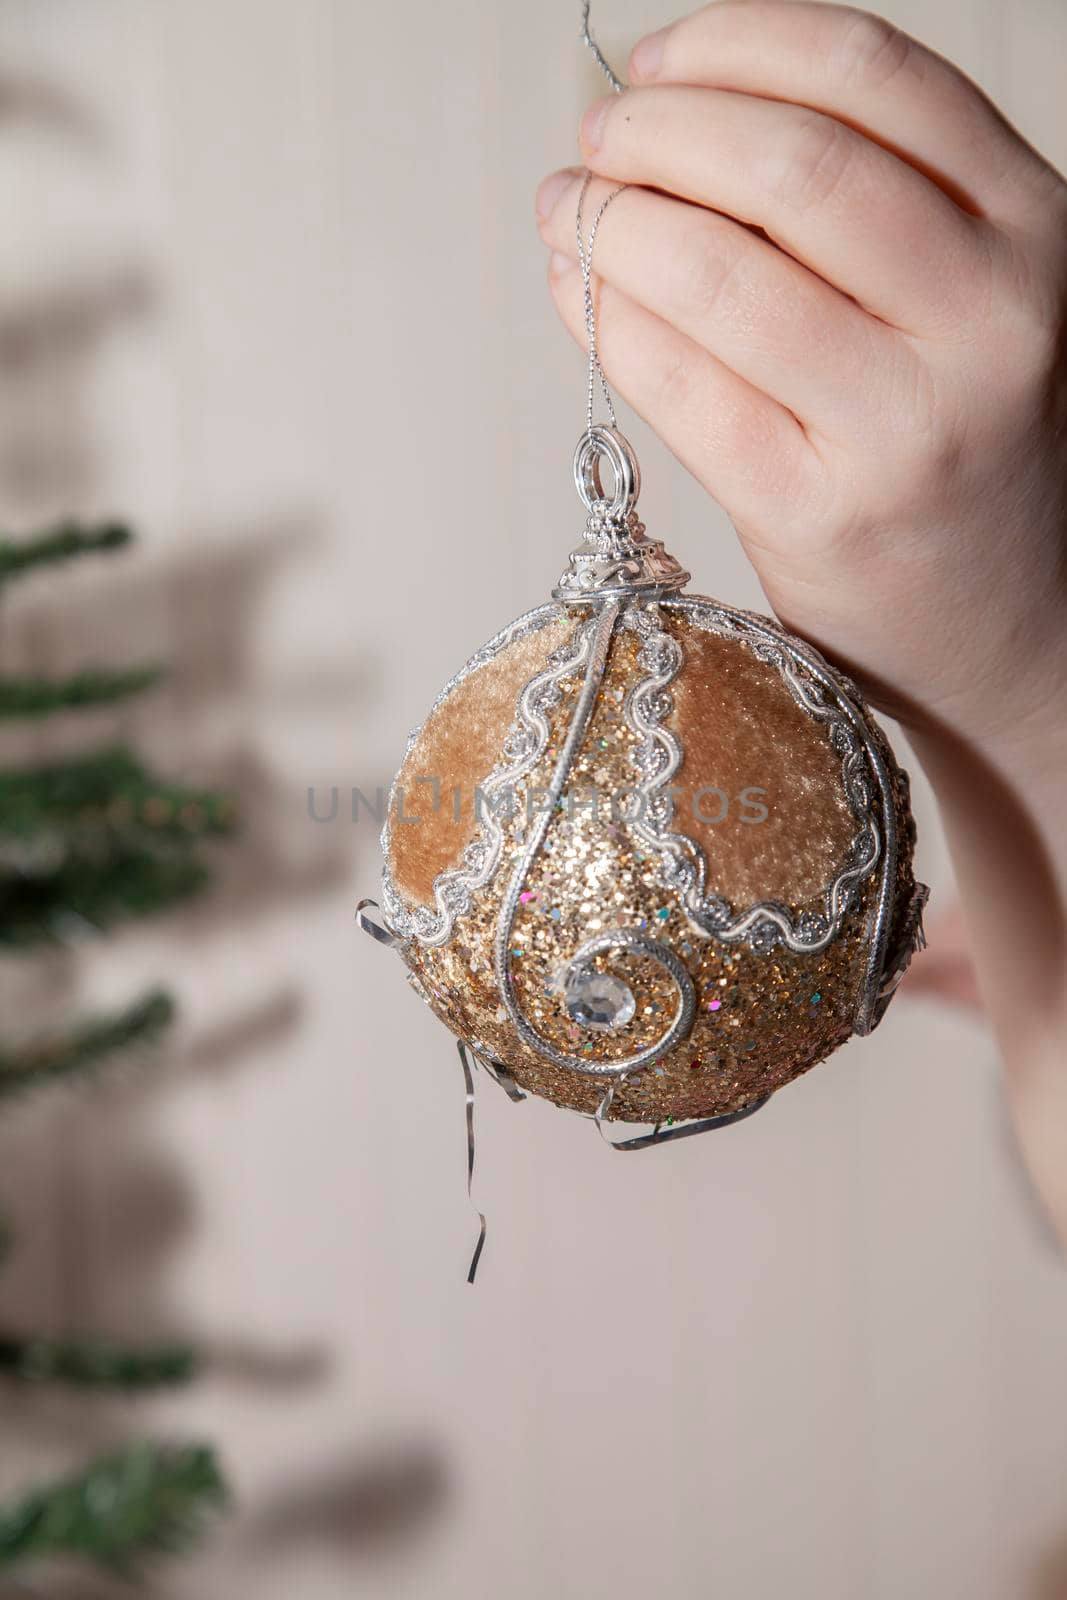 Woman preparing to hang a fuzzy, tan Christmas ornament